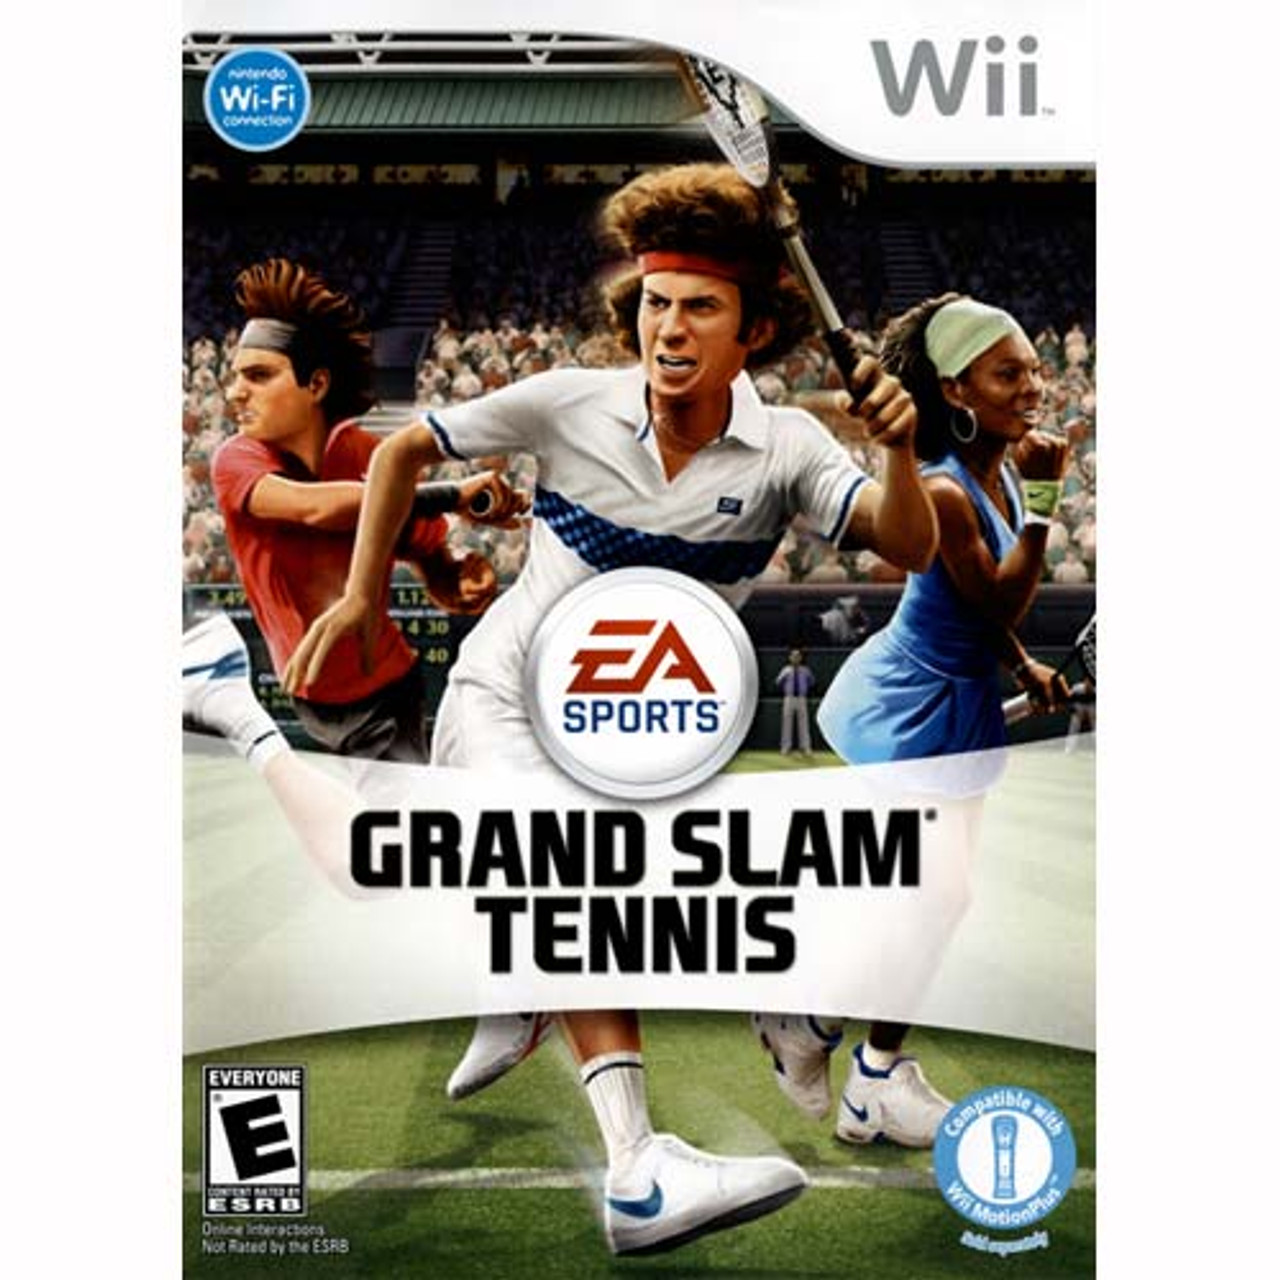 Grand Slam Tennis Nintendo Wii Game For Sale DKOldies